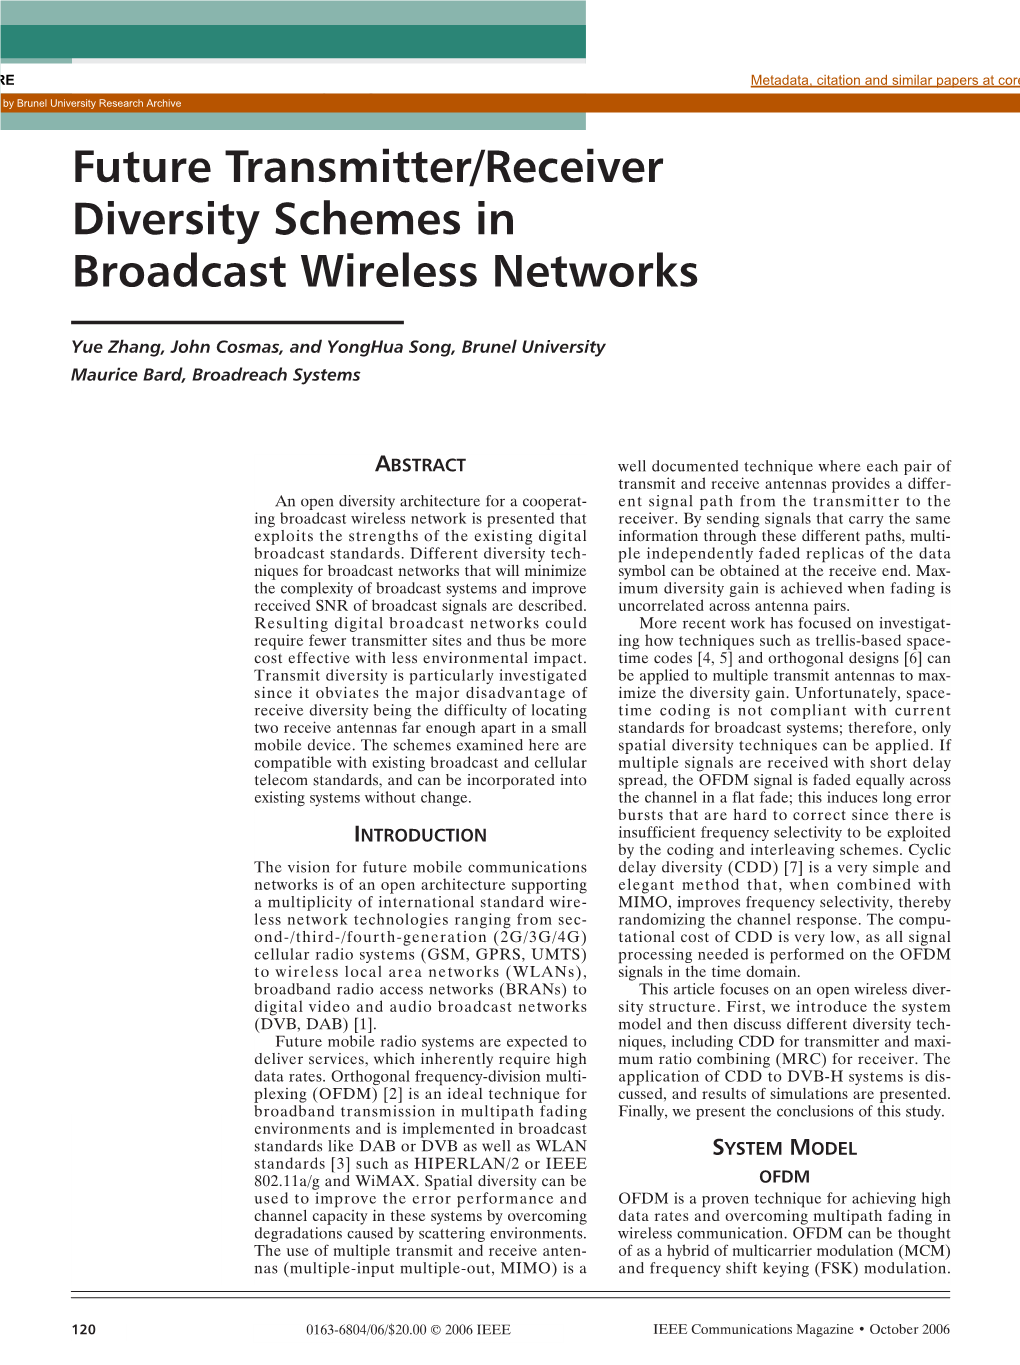 Future Transmitter/Receiver Diversity Schemes in Broadcast Wireless Networks